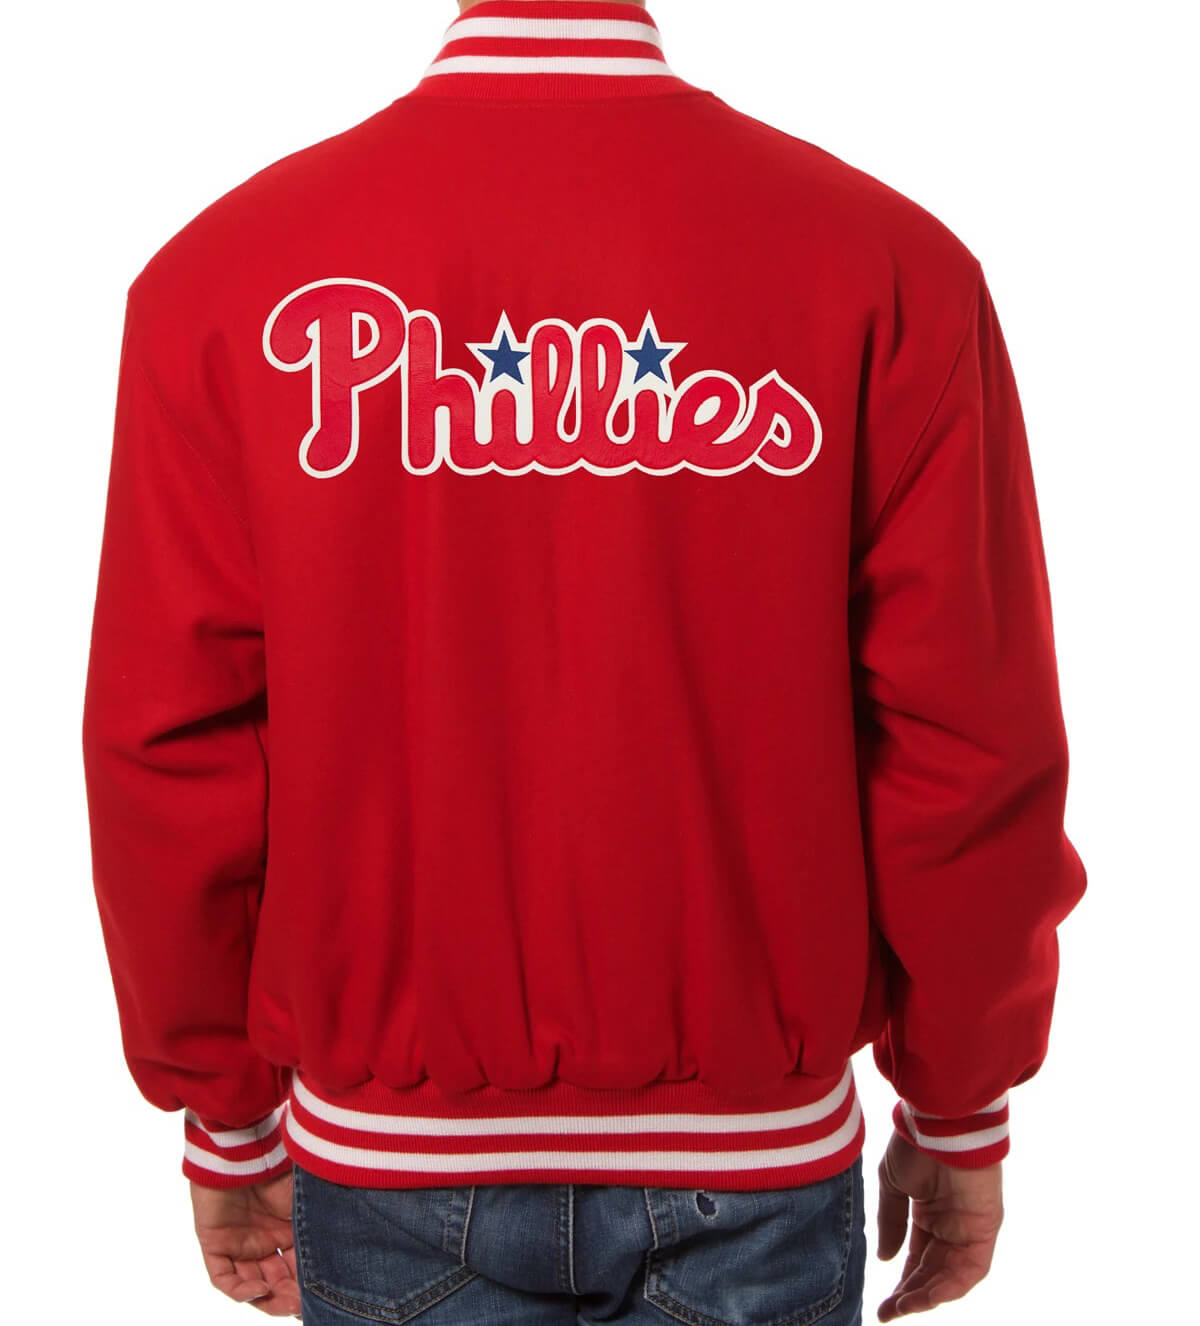 MLB Team Apparel Youth Philadelphia Phillies Red Letterman T-Shirt